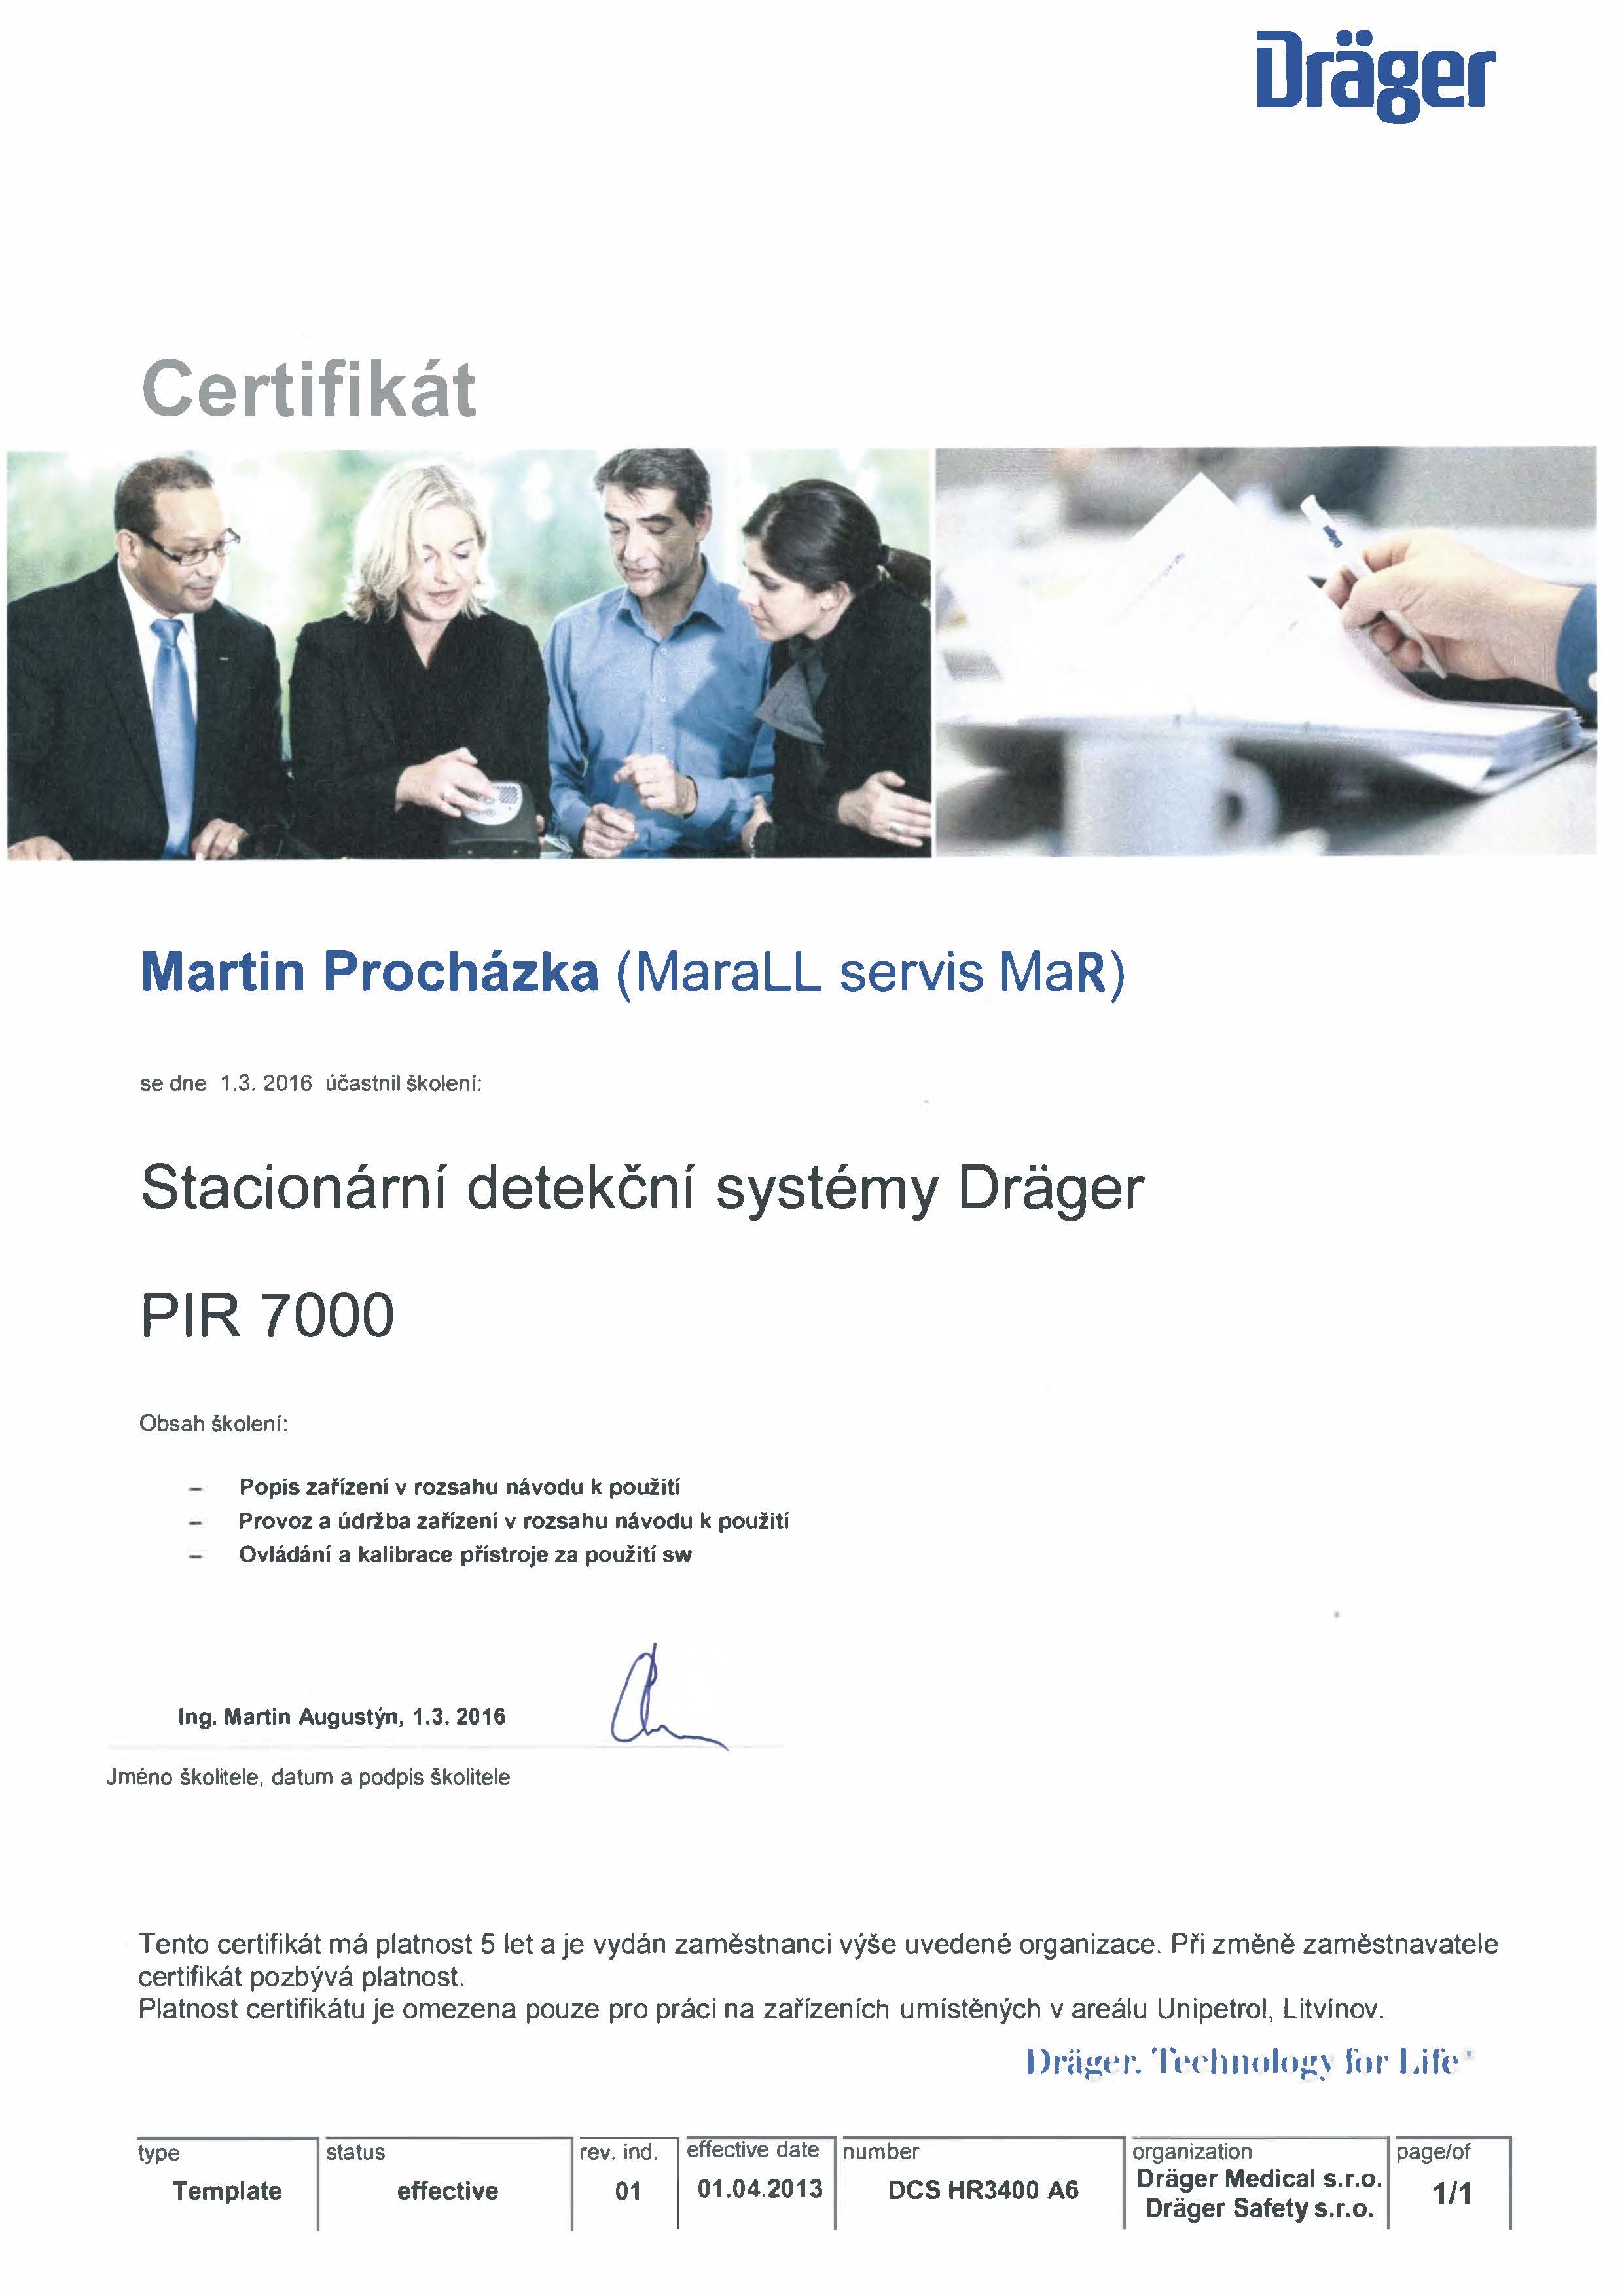 Certifikat M.Procházka Dräger